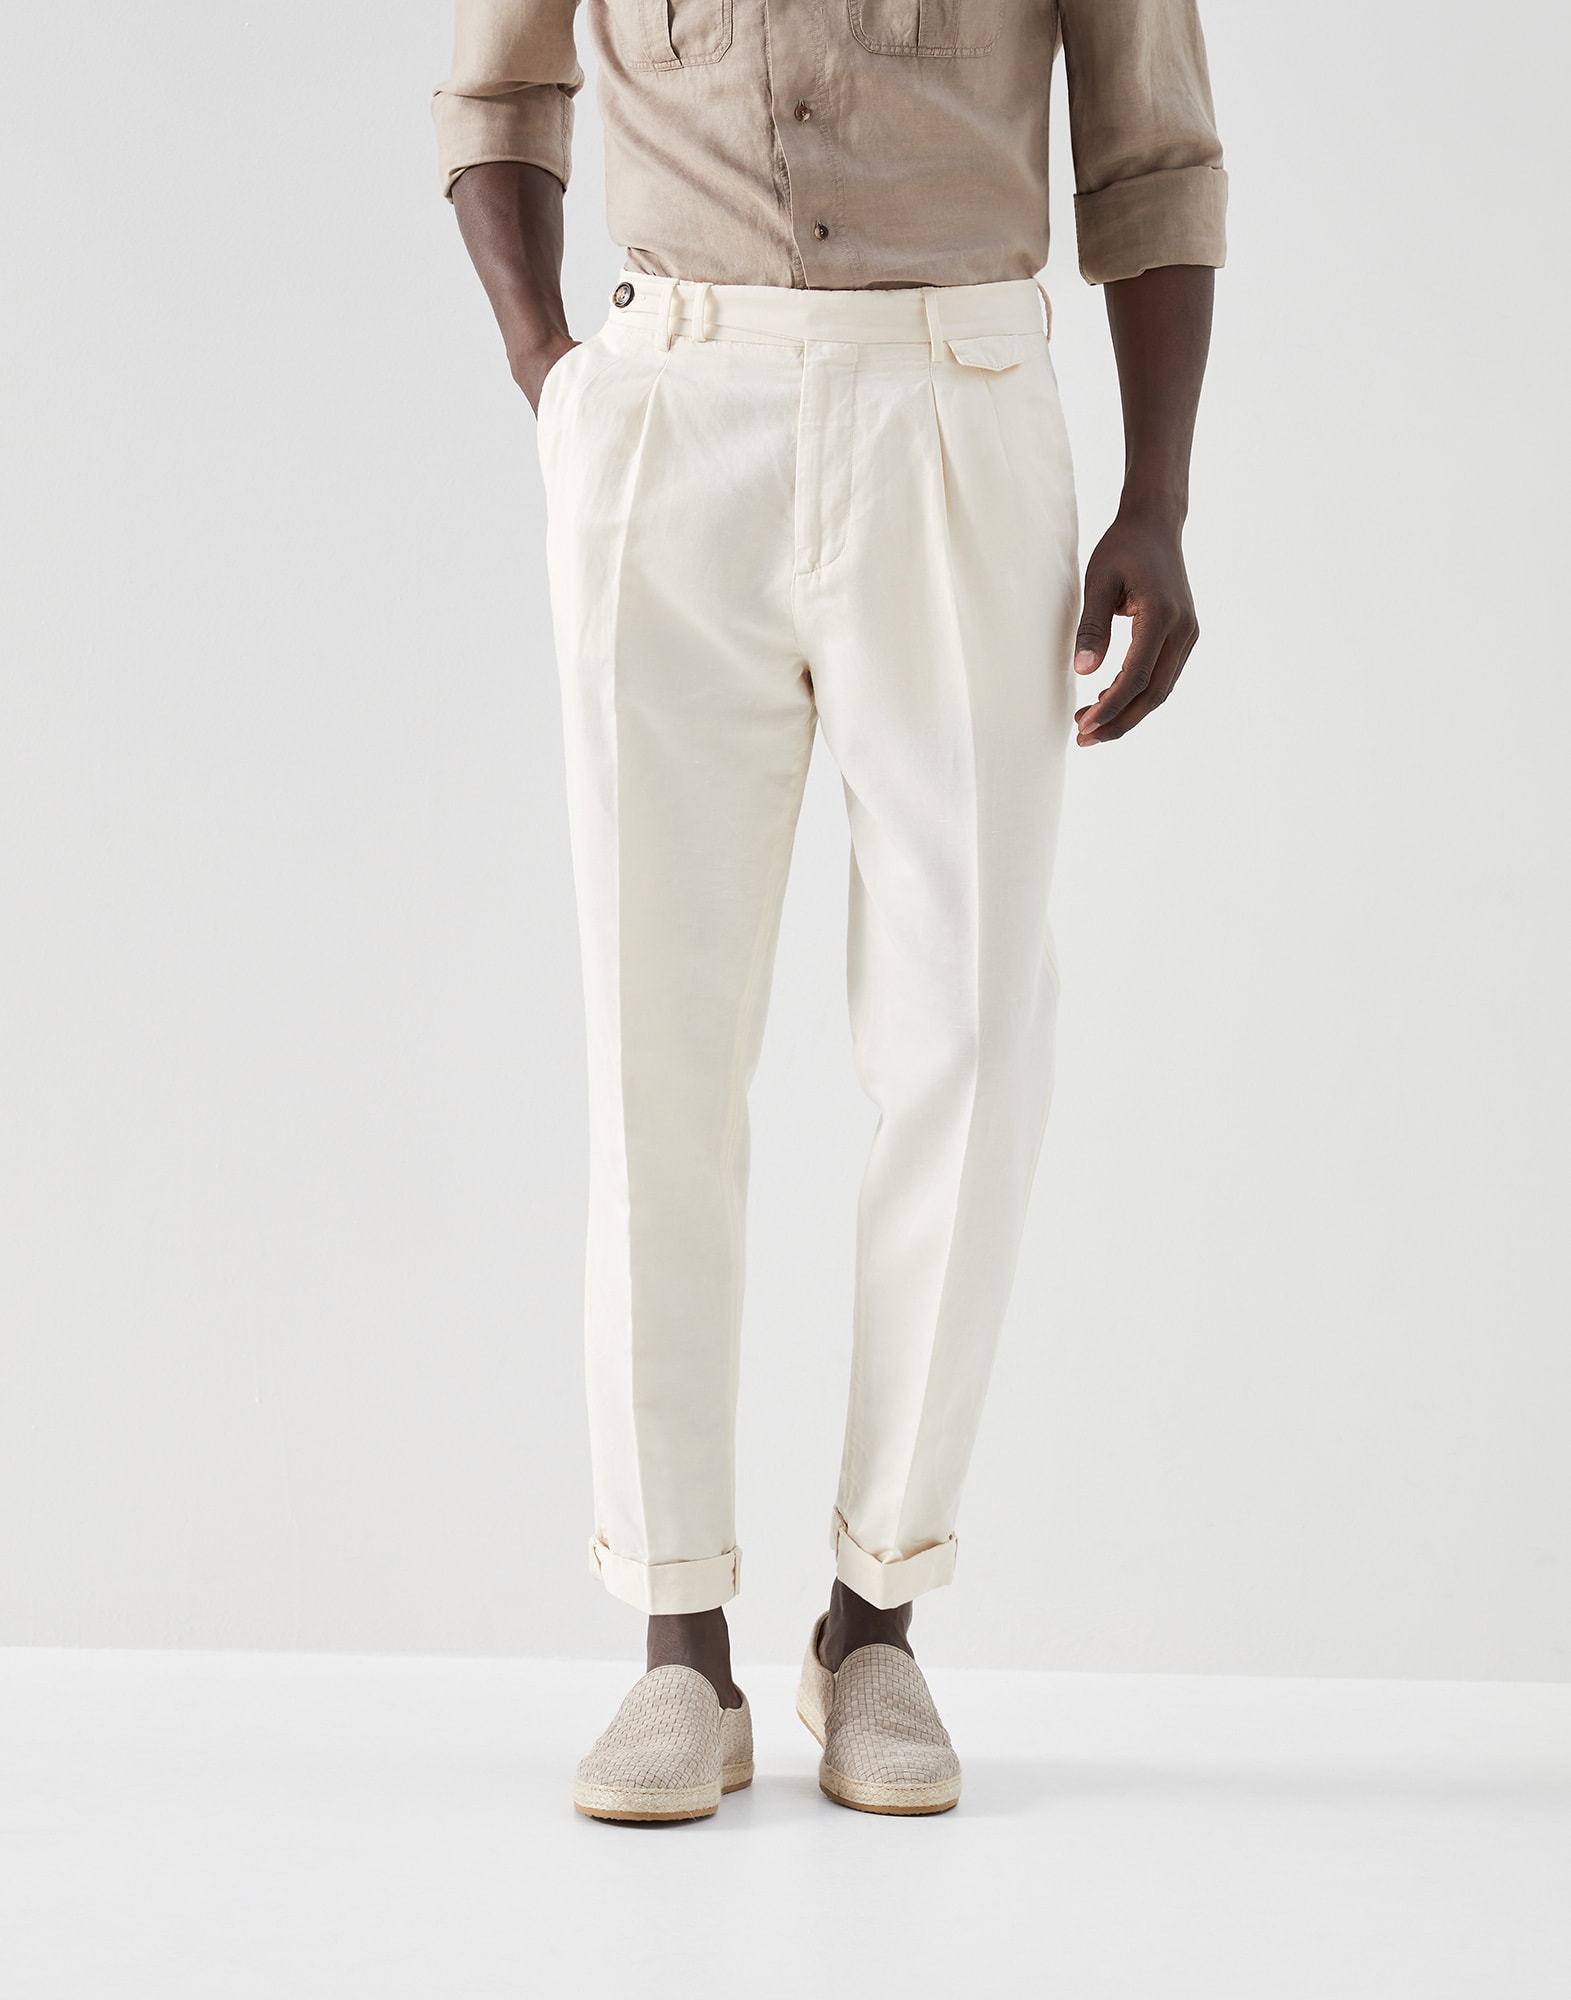 Off White Pure Linen Trousers For Men  Linen Trail